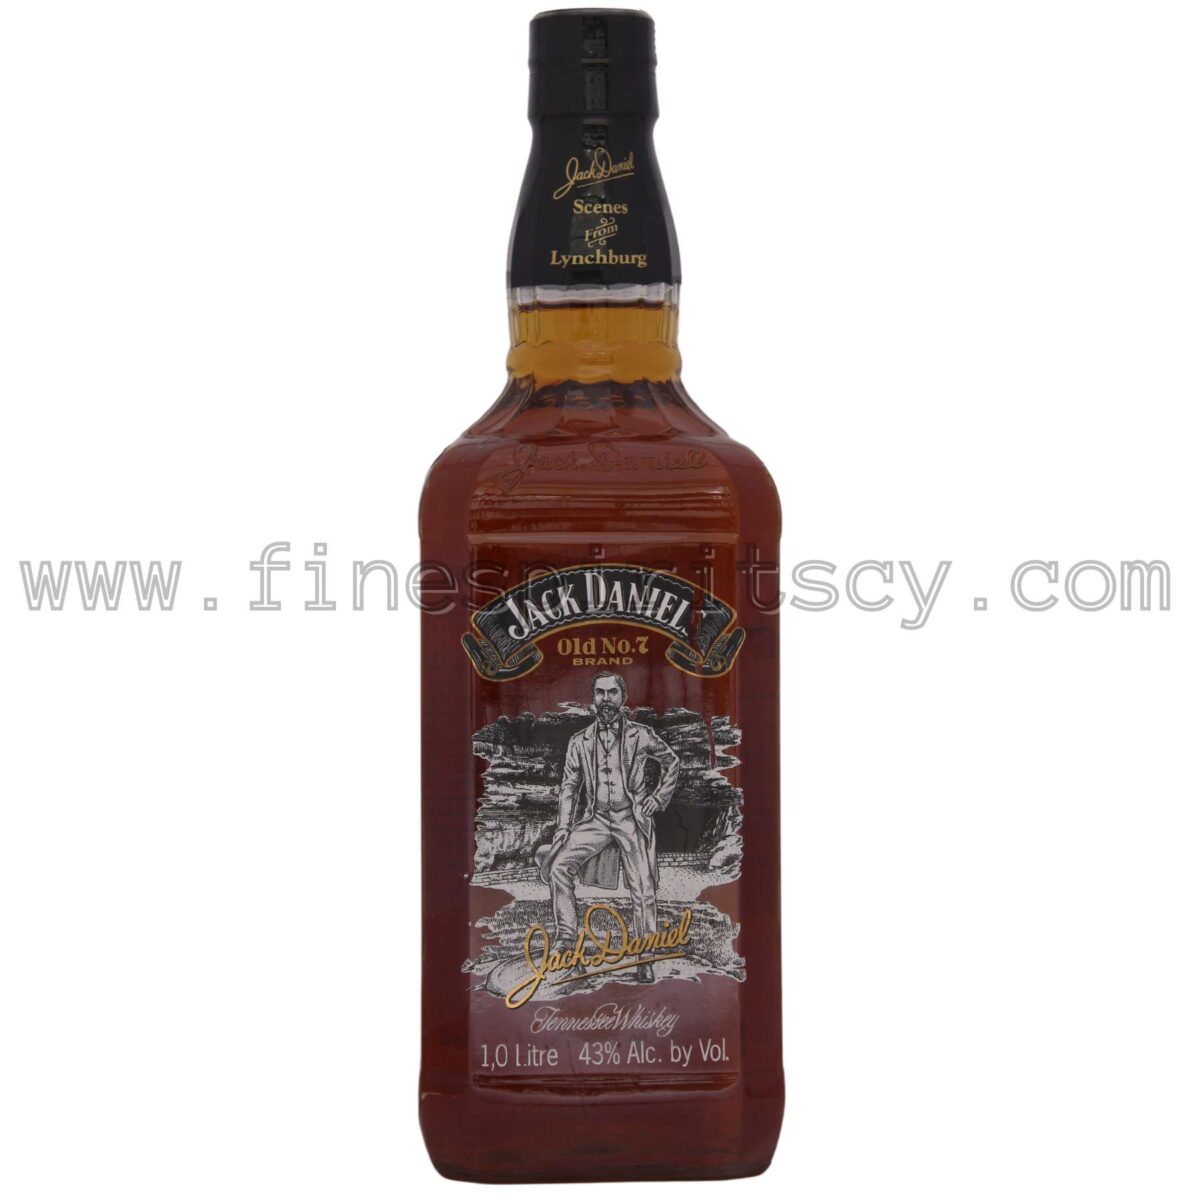 Jack Daniels Scenes From Lynchburg No. 5 Price FS Cyprus Whisky Whiskey CY